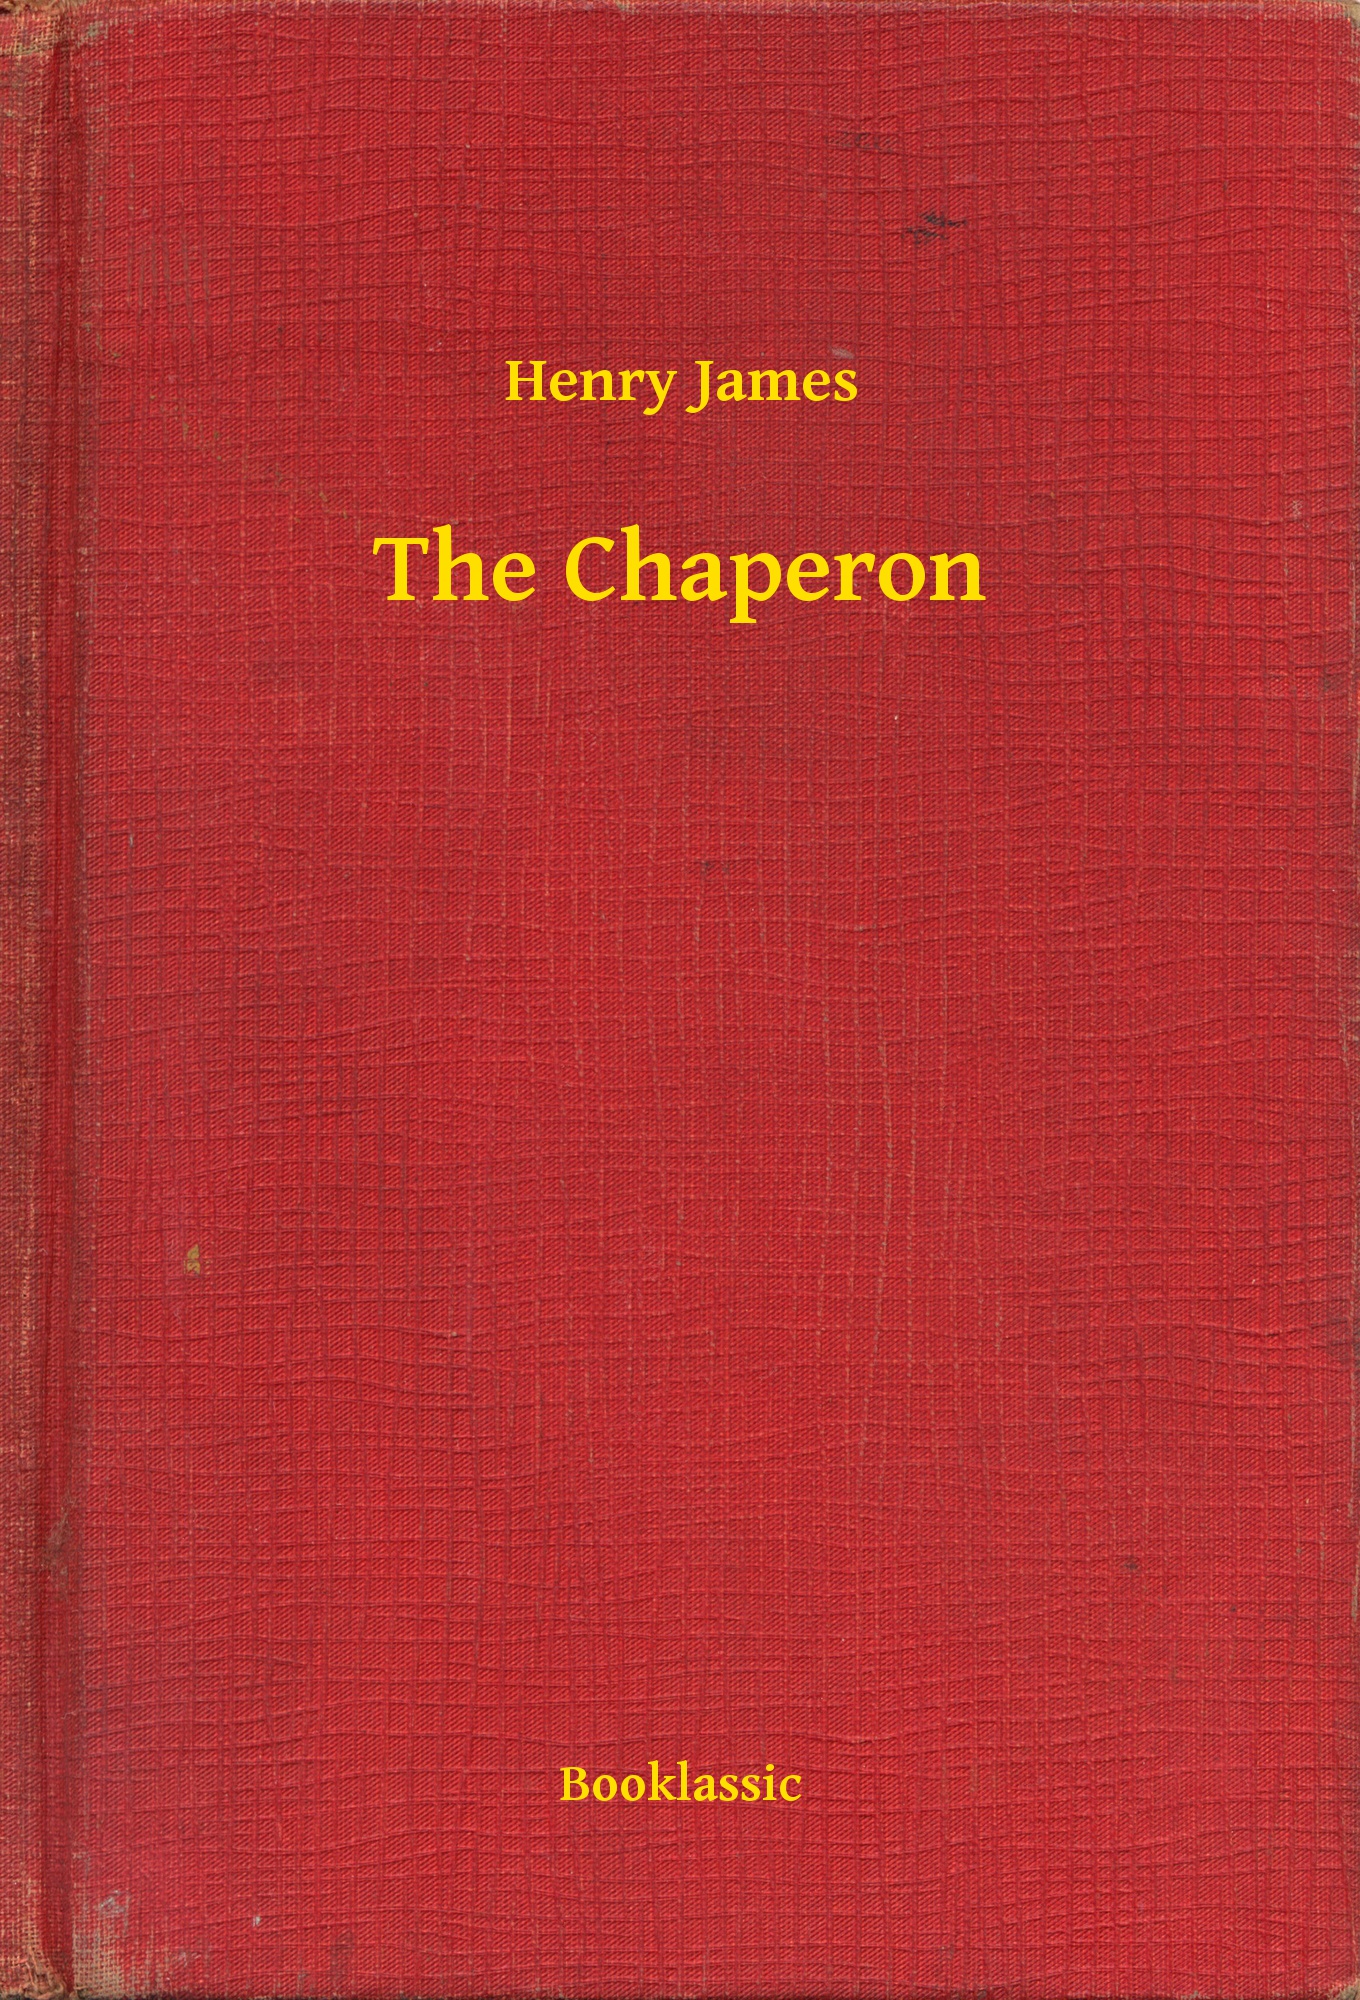 The Chaperon